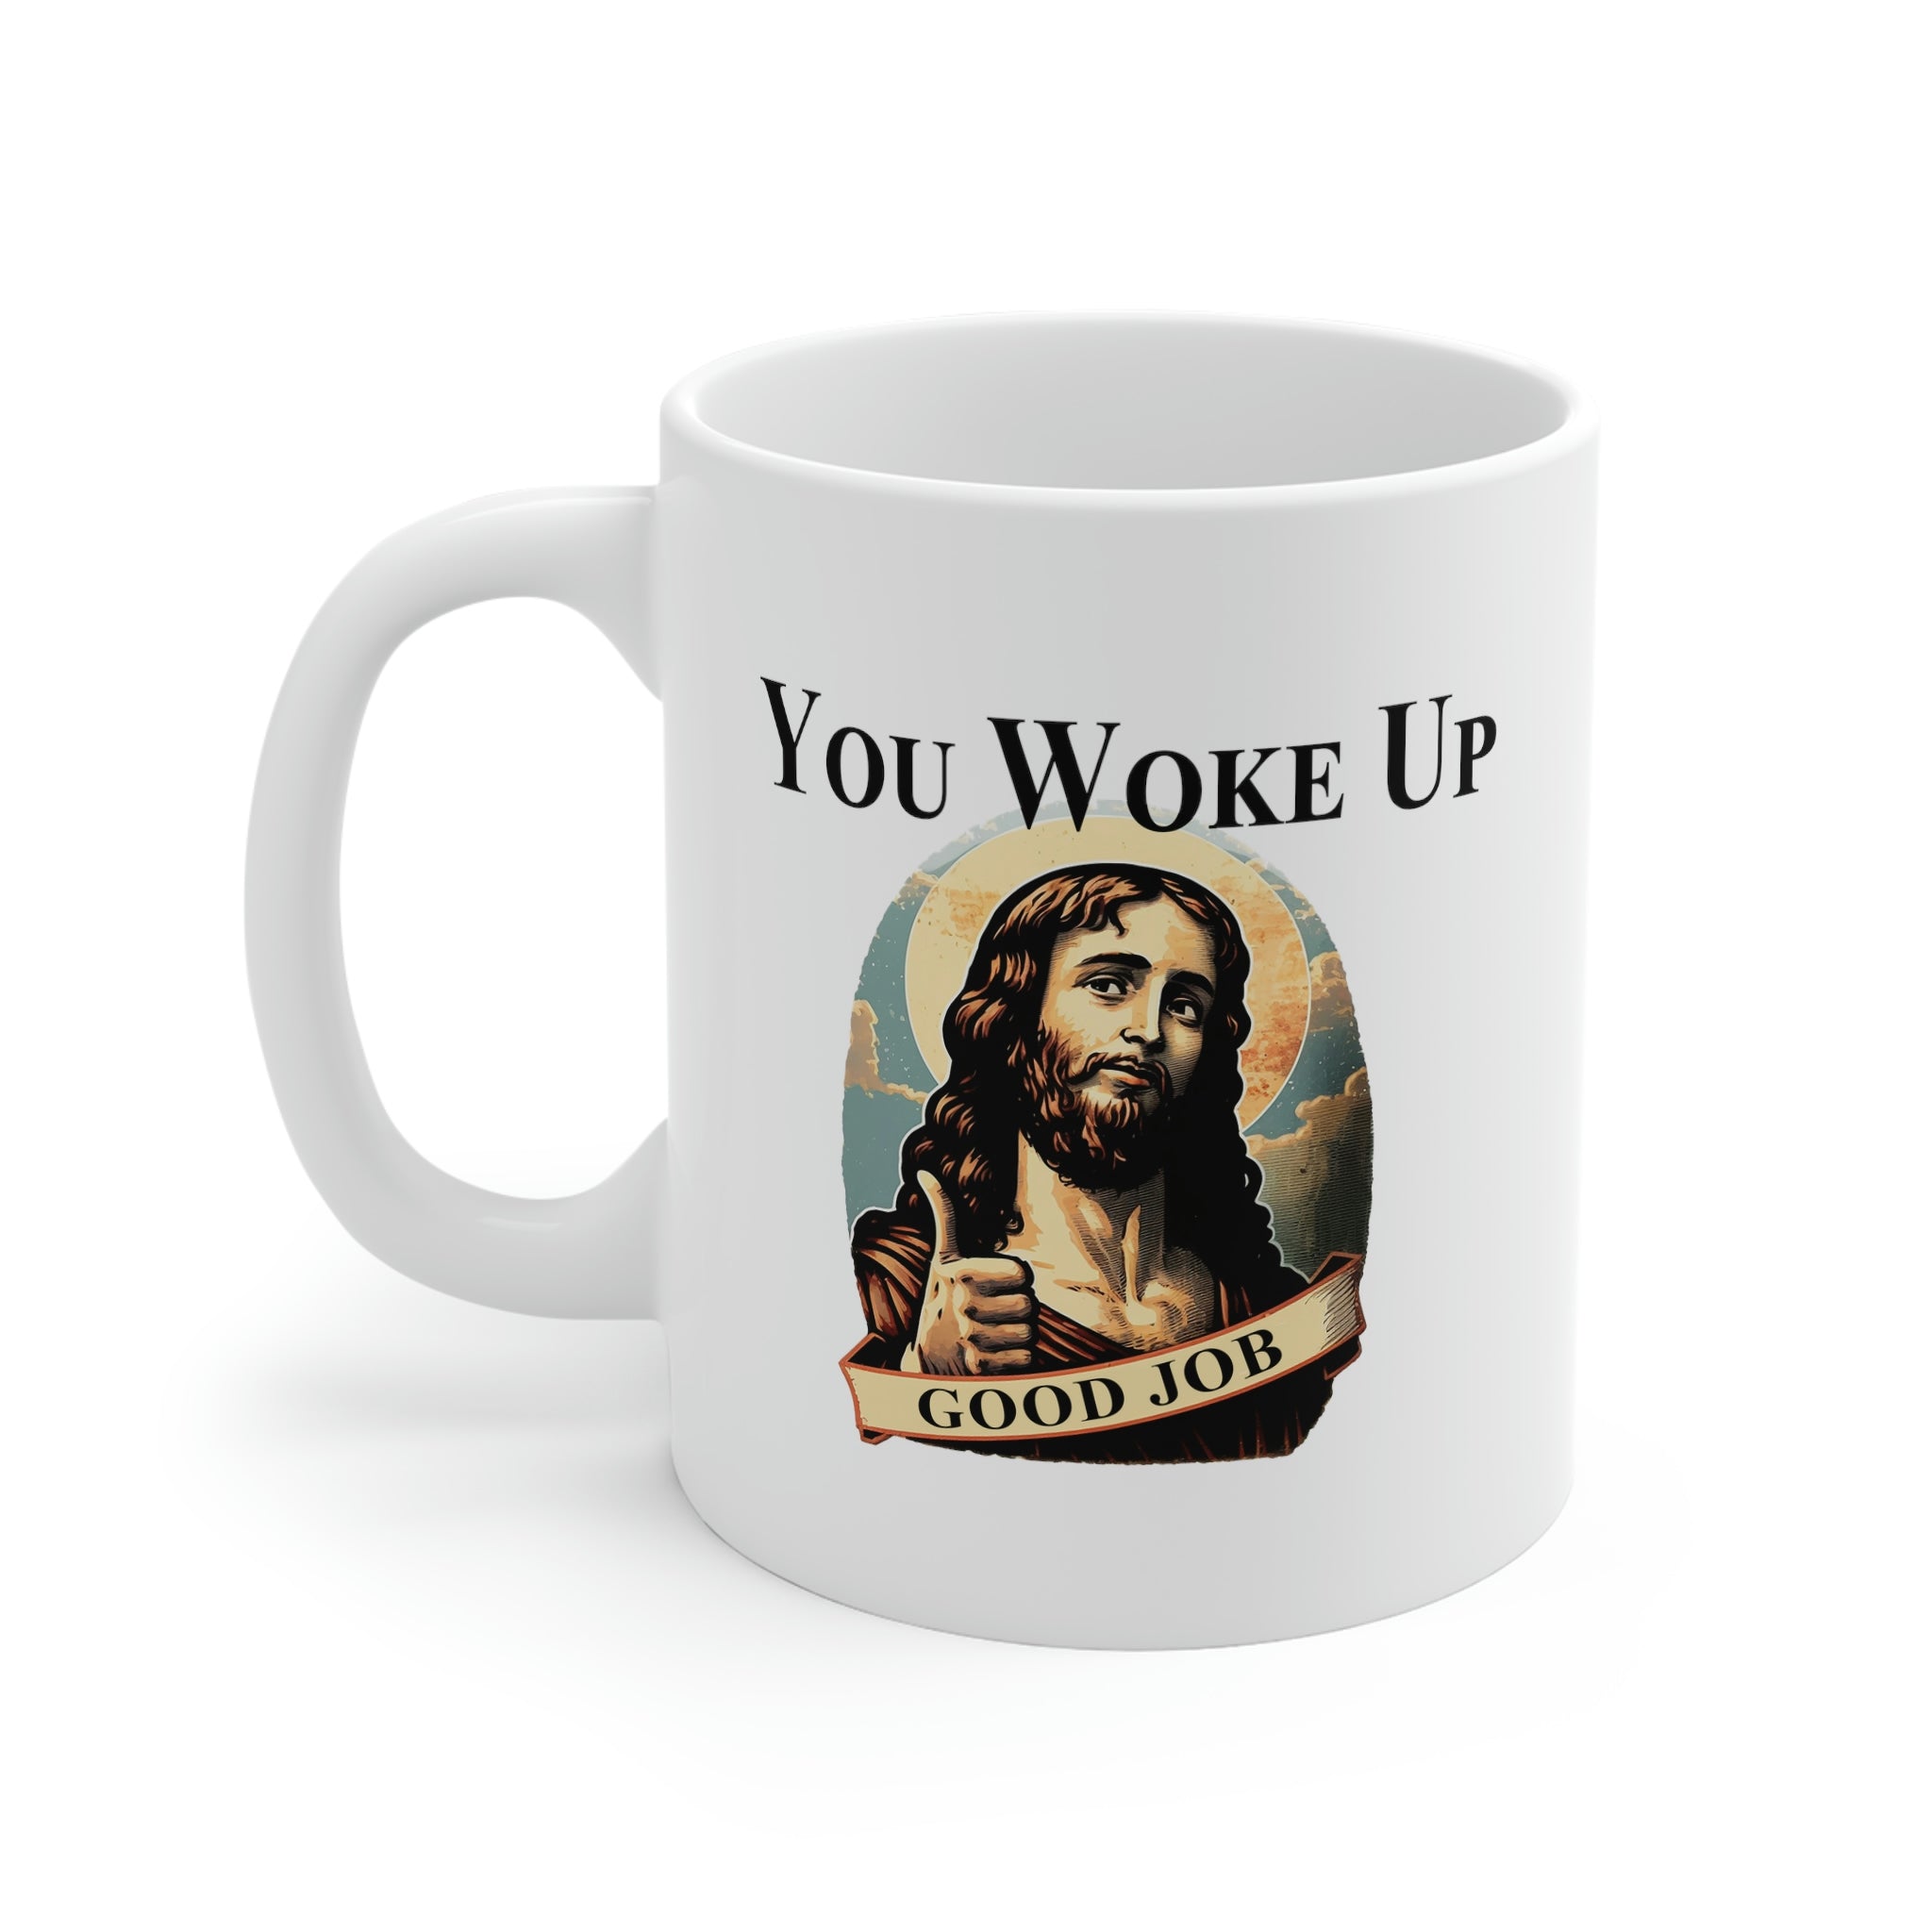 Good Job You Woke Up - Jesus Thumbs Up Funny Mug